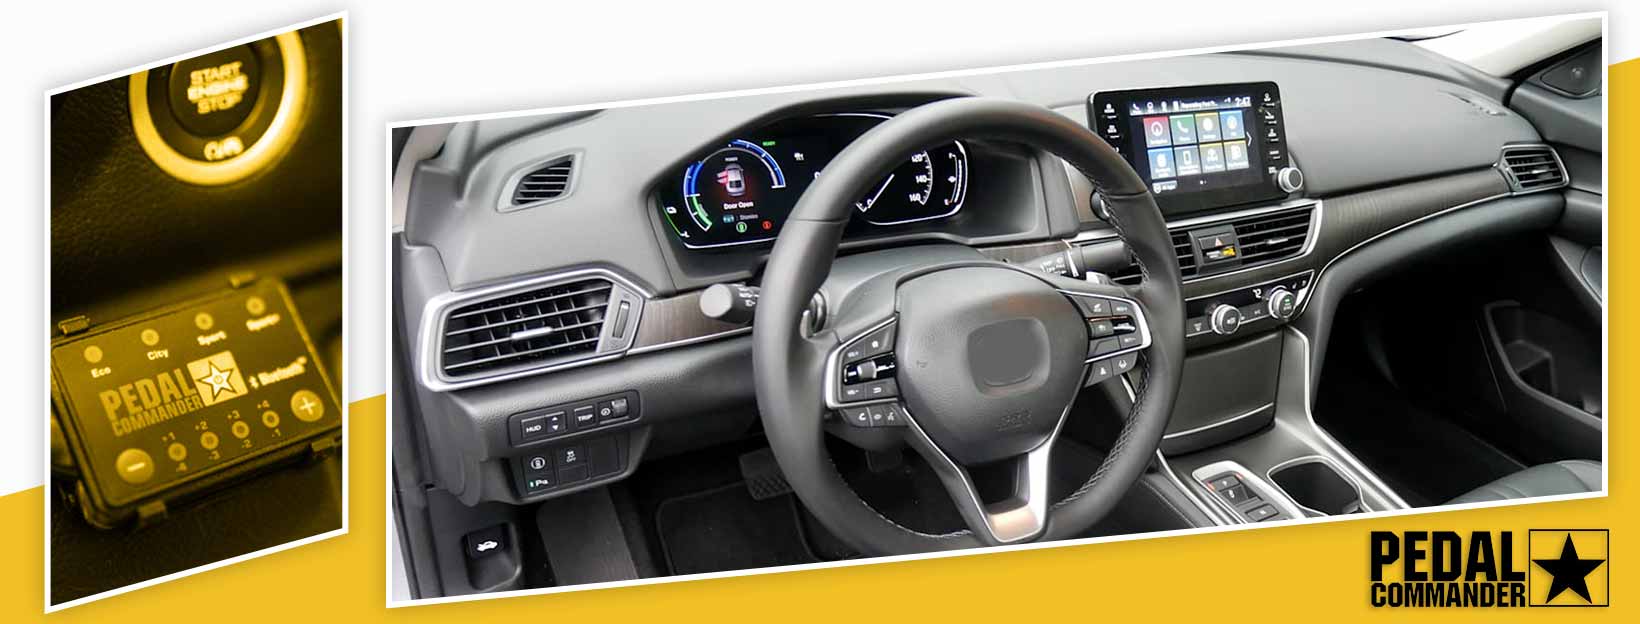 Pedal Commander for Honda Accord - interior